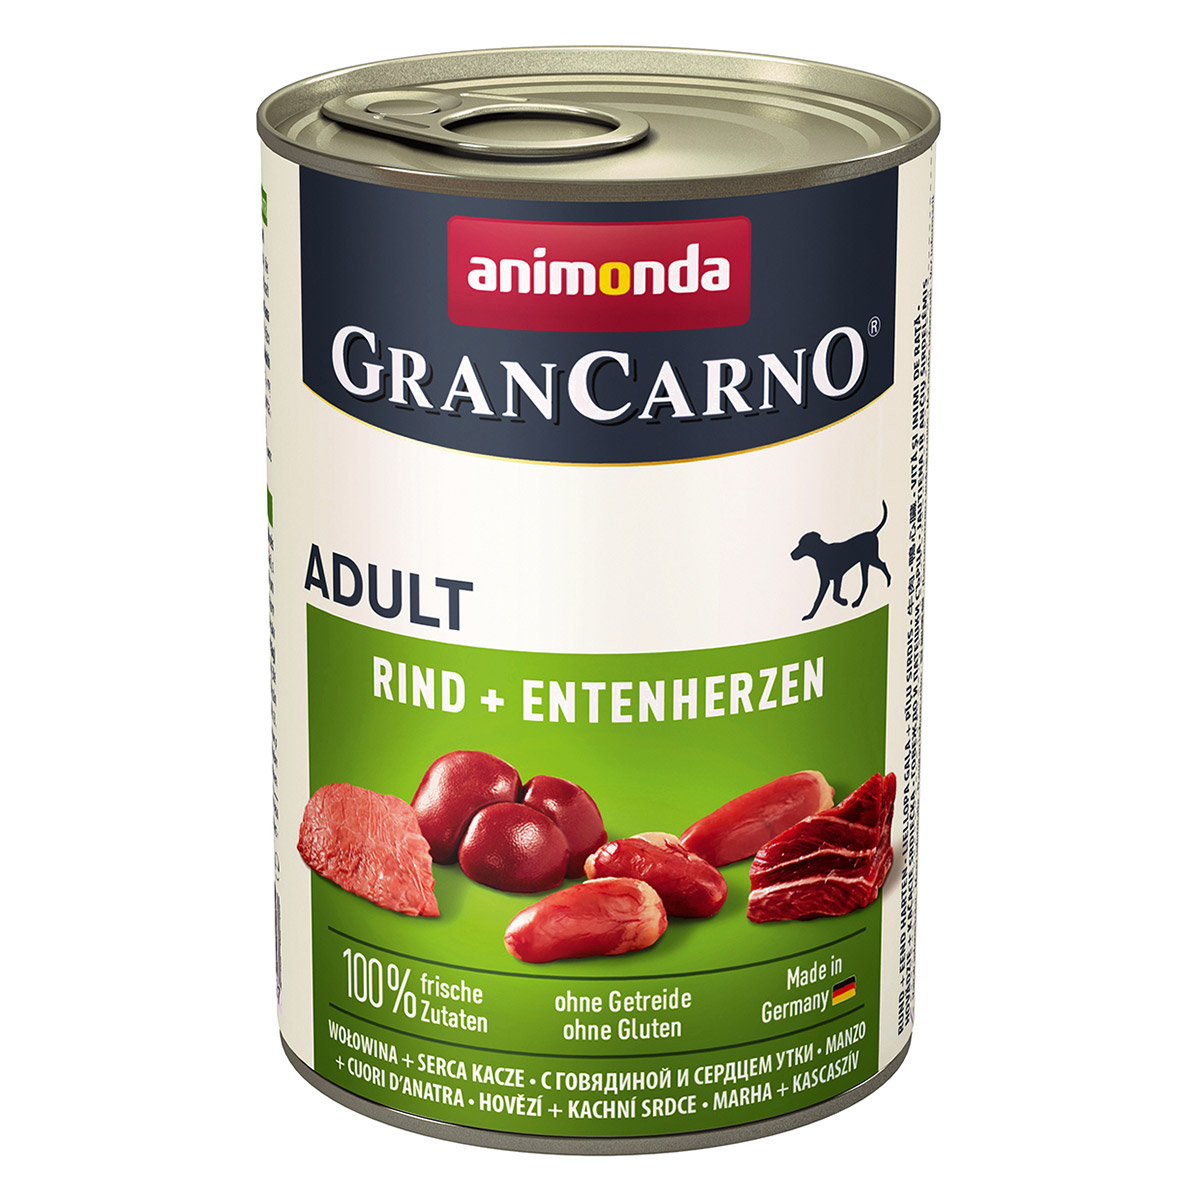 animonda grancarno adult rind entenherzen 400g